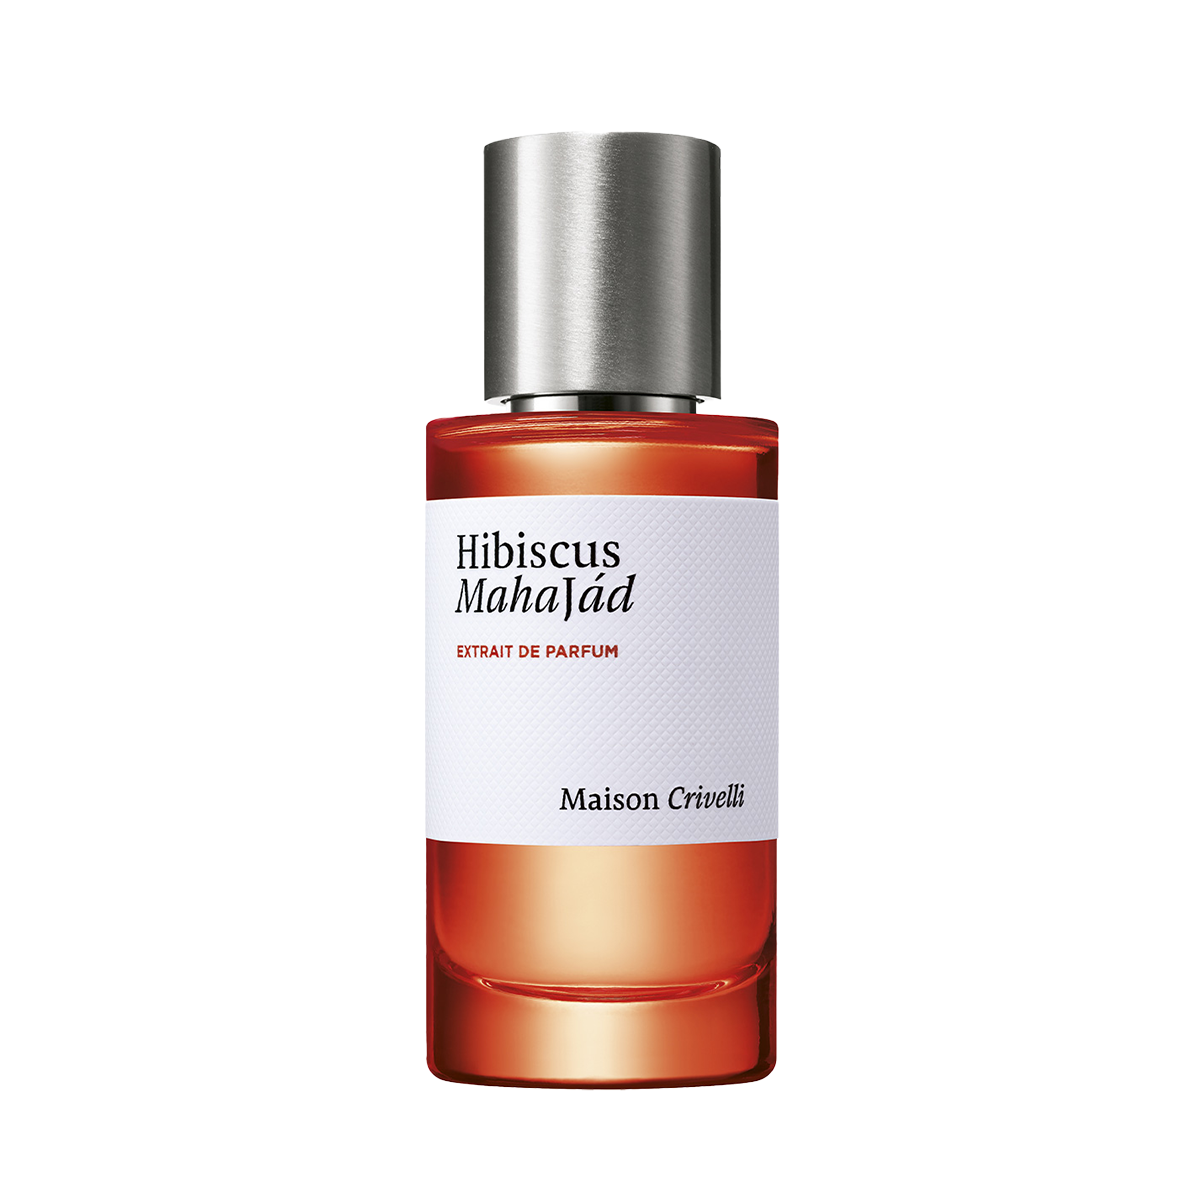 Hibiscus Mahajad <br> Extrait de Parfum 50ml